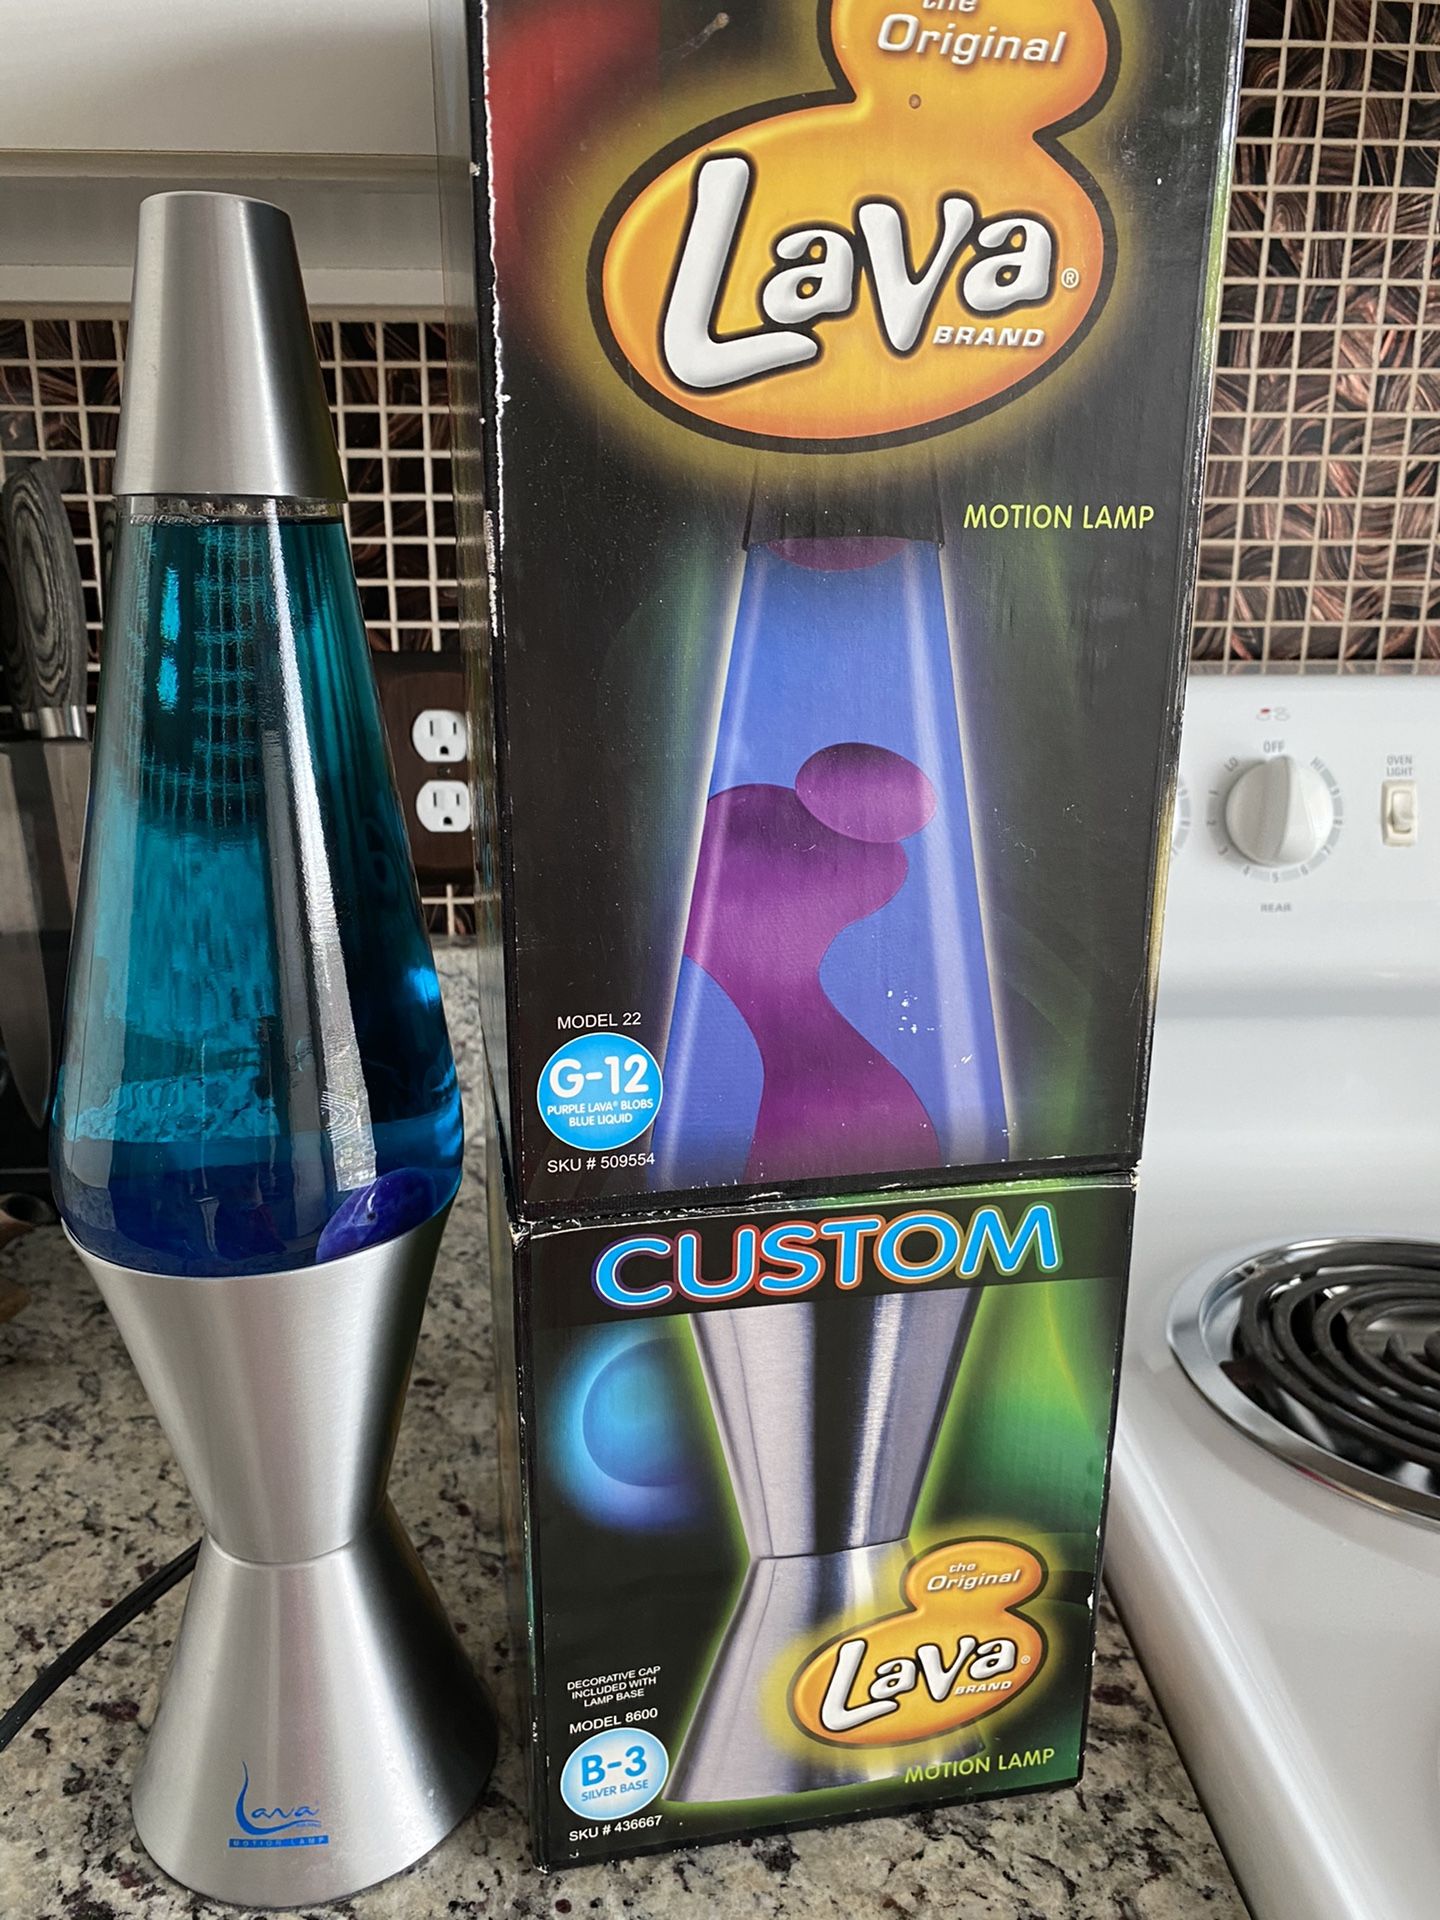 Original lava brand motion lamp